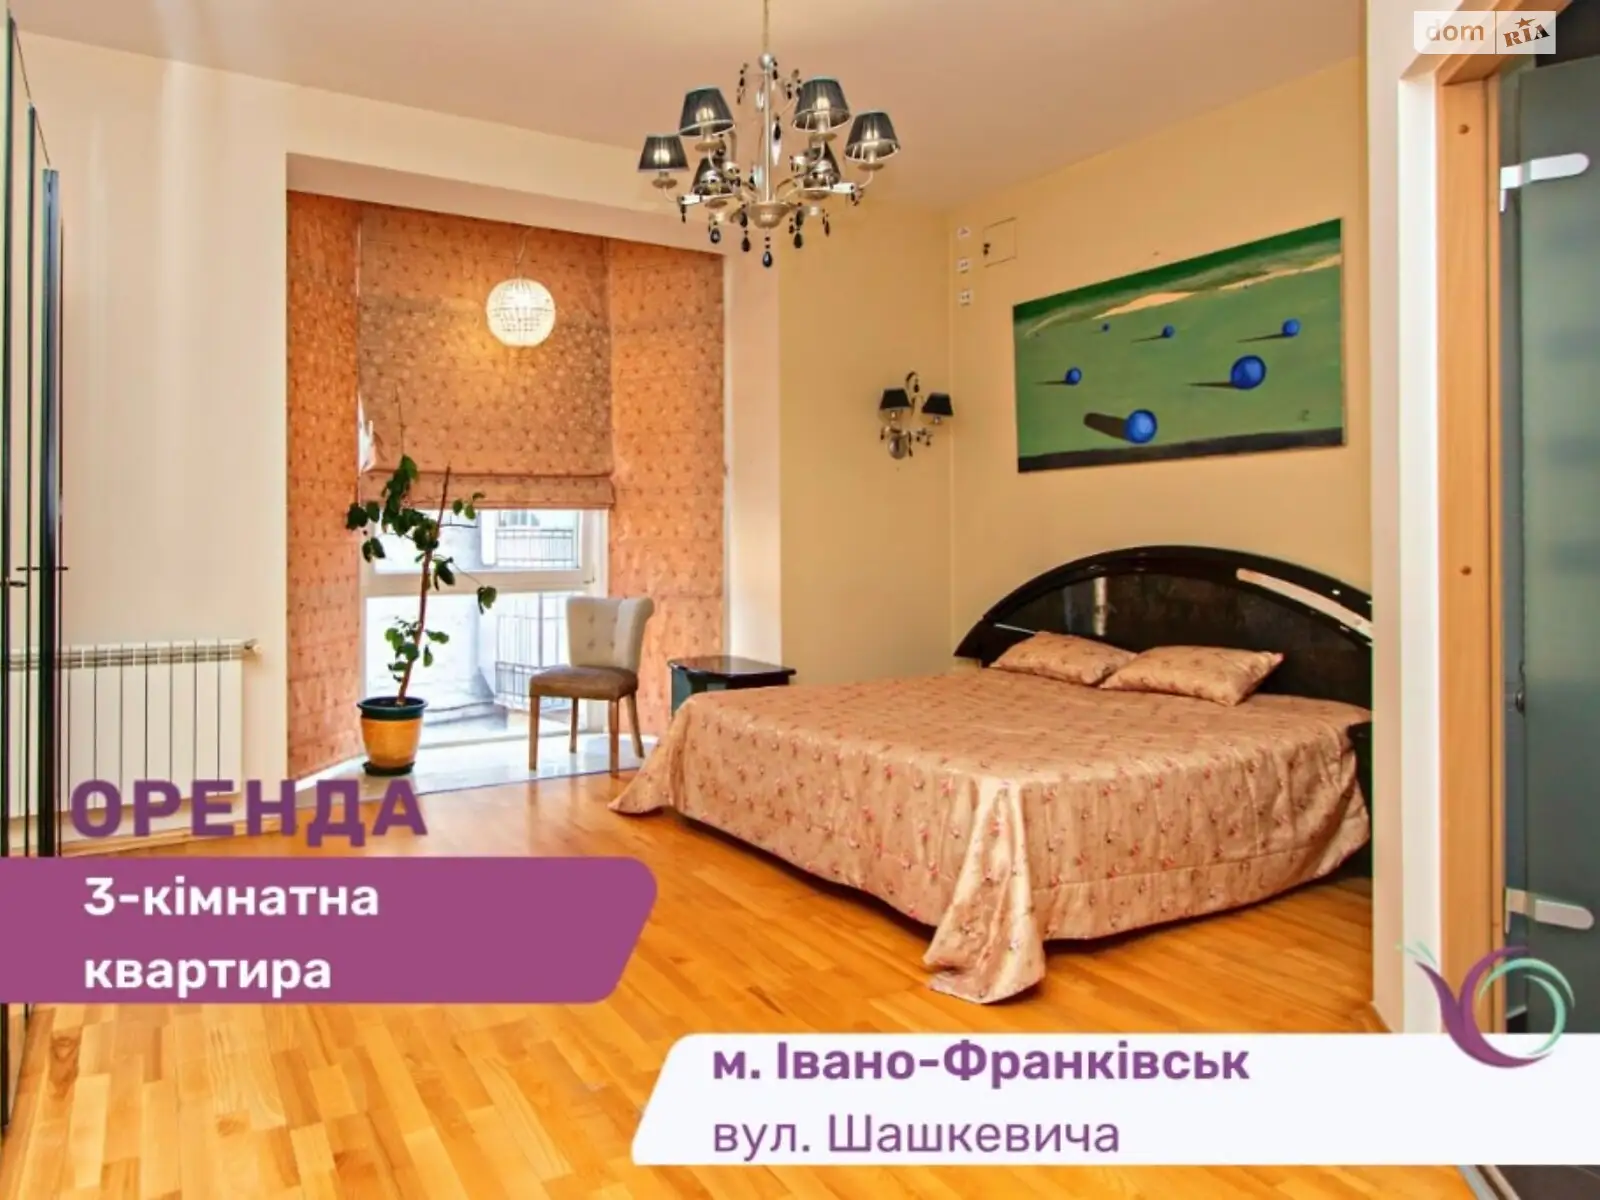 Сдается в аренду 3-комнатная квартира 100 кв. м в Ивано-Франковске, ул. Шашкевича - фото 1